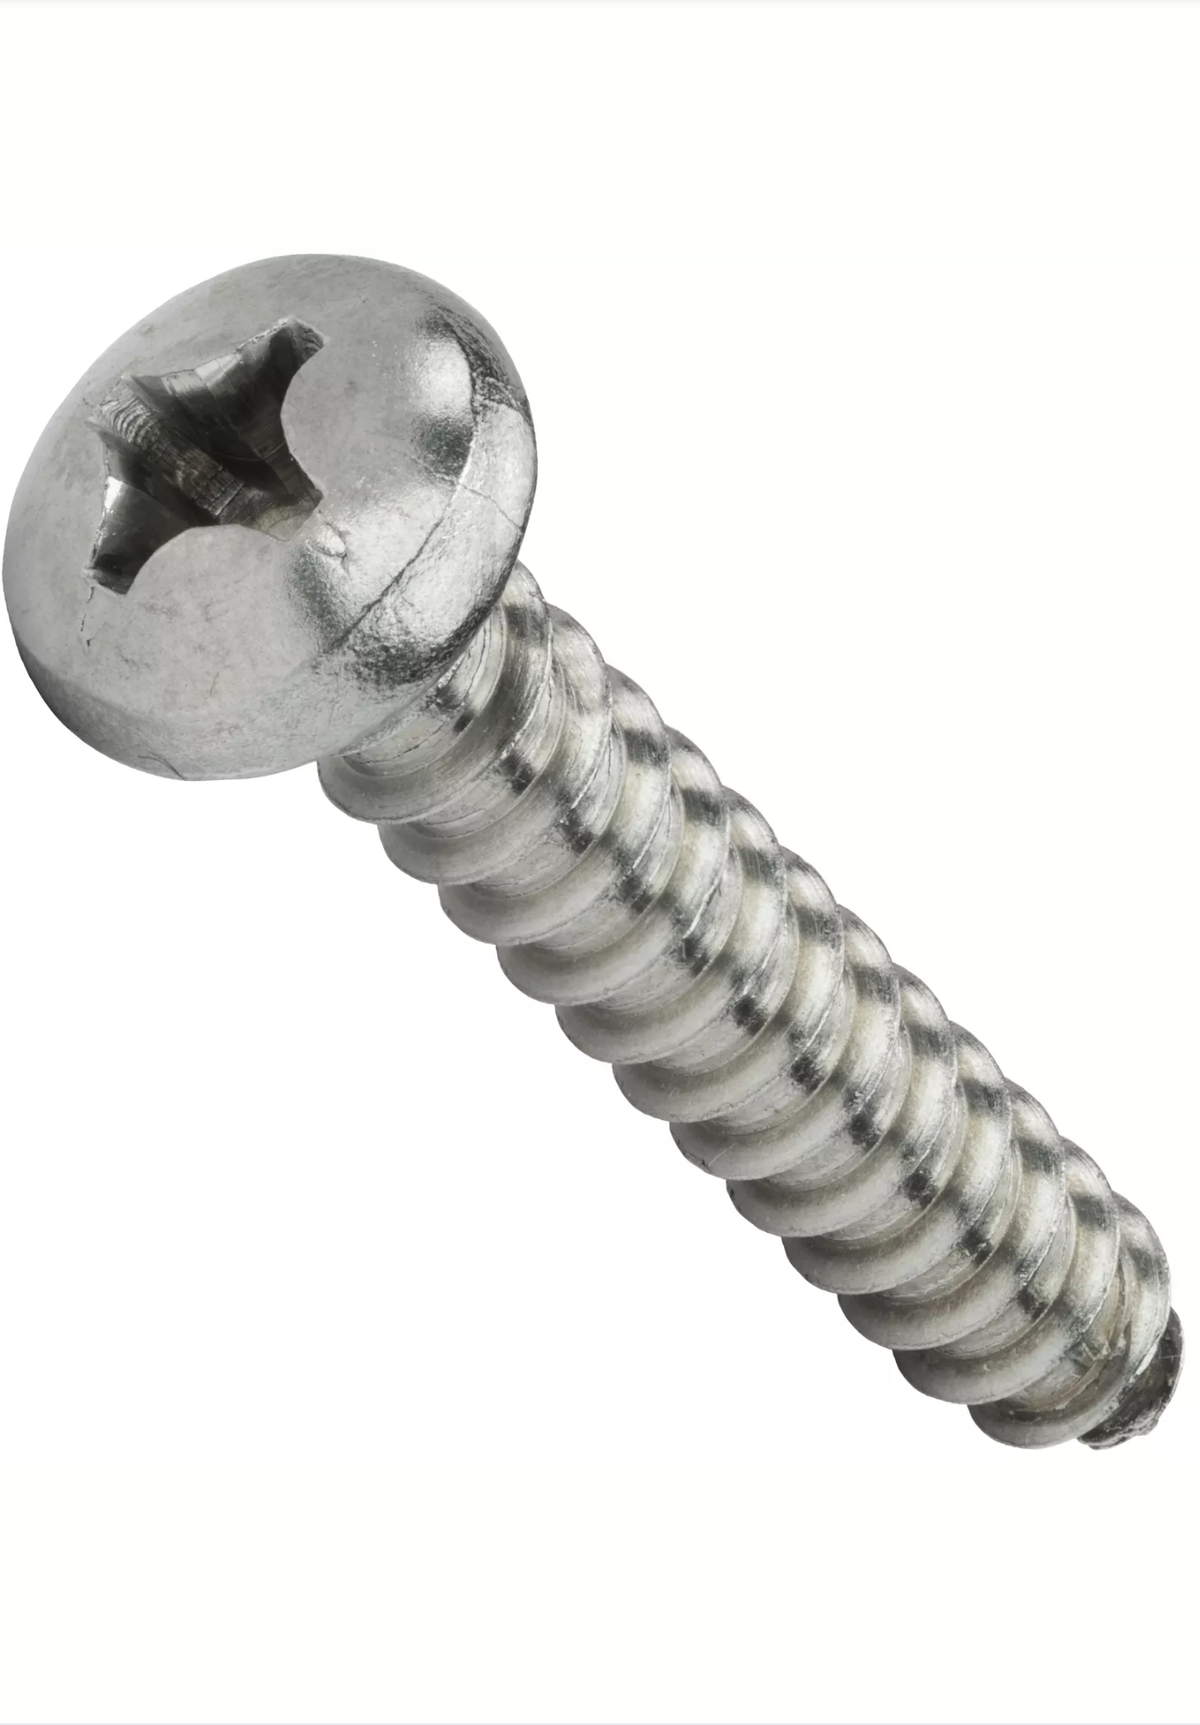 5 TOWAIDE replacement screw set